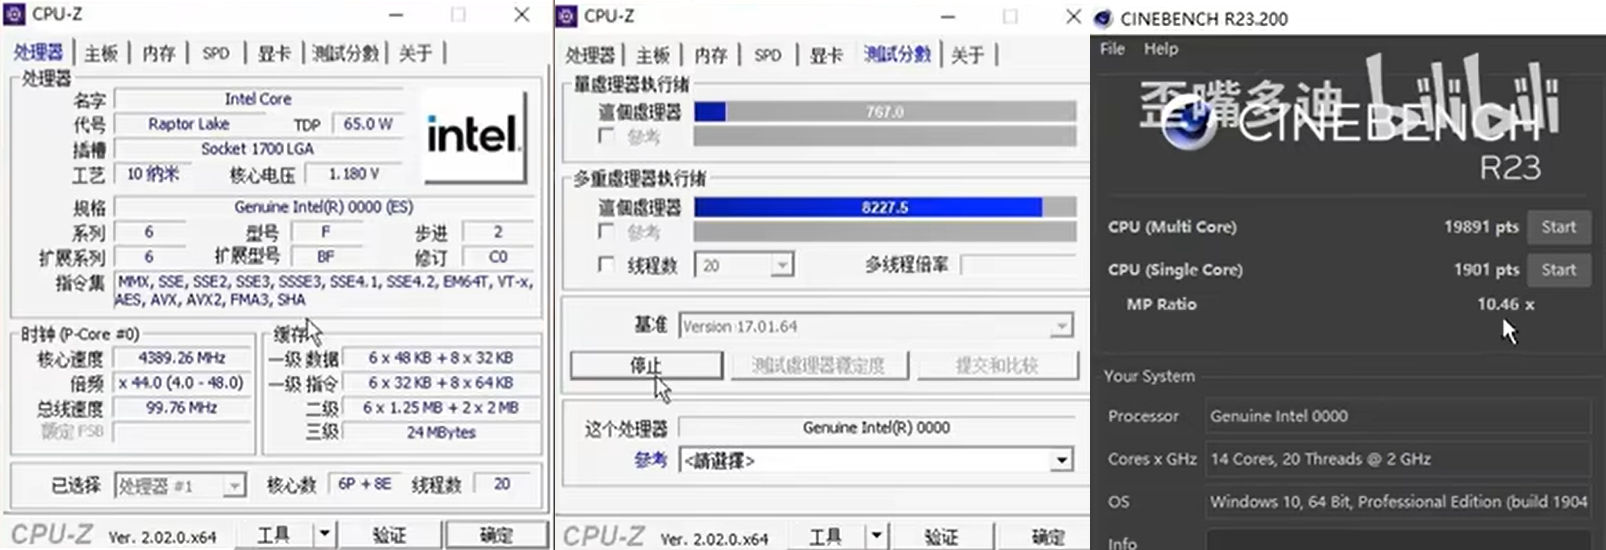 core 13500 13400 cpuz 1 1 หลุดภาพซีพียู Intel Core i5 13500 ความเร็ว 4.8Ghz พร้อมผลทดสอบอย่างไม่เป็นทางการ 